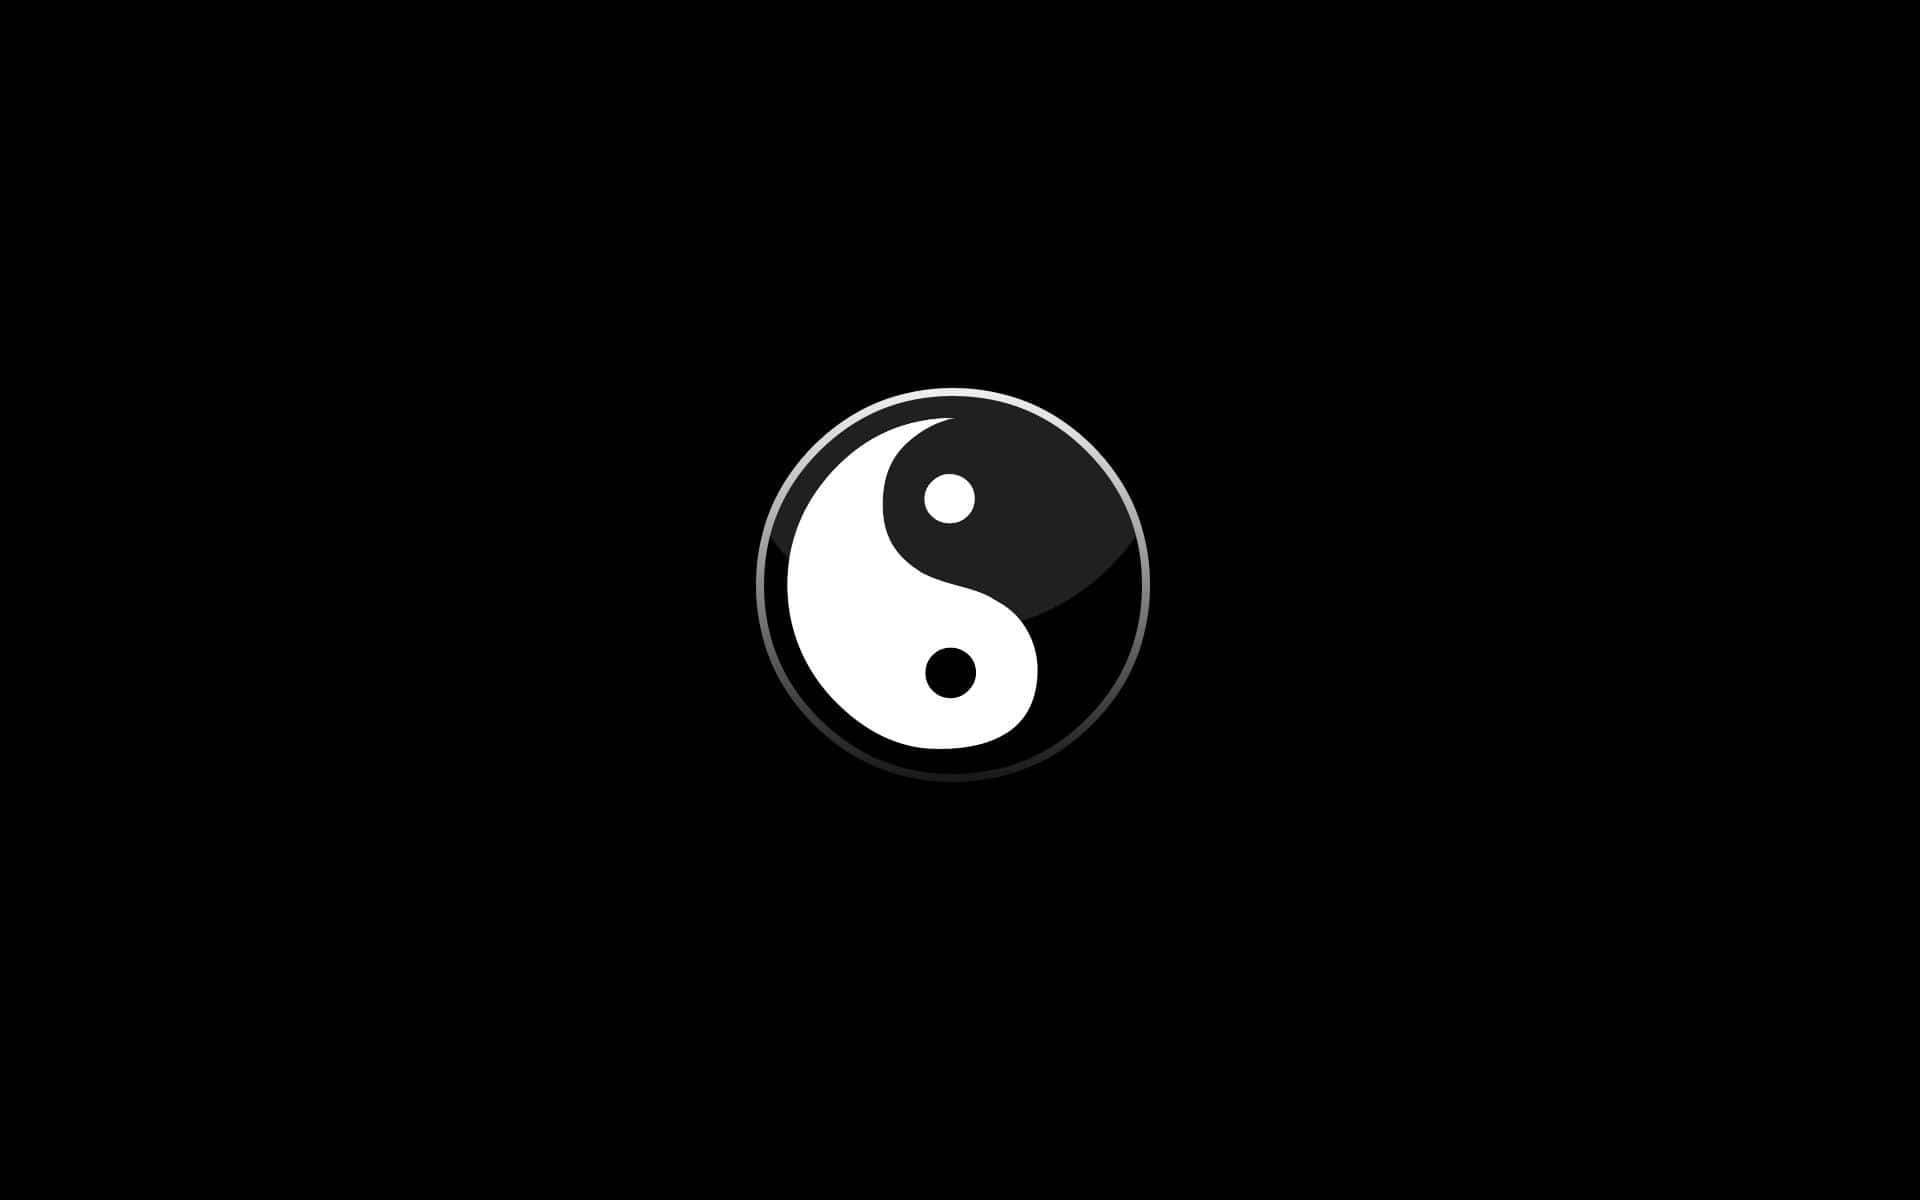 Simple Black And White Yin Yang Emblem 4K Wallpaper